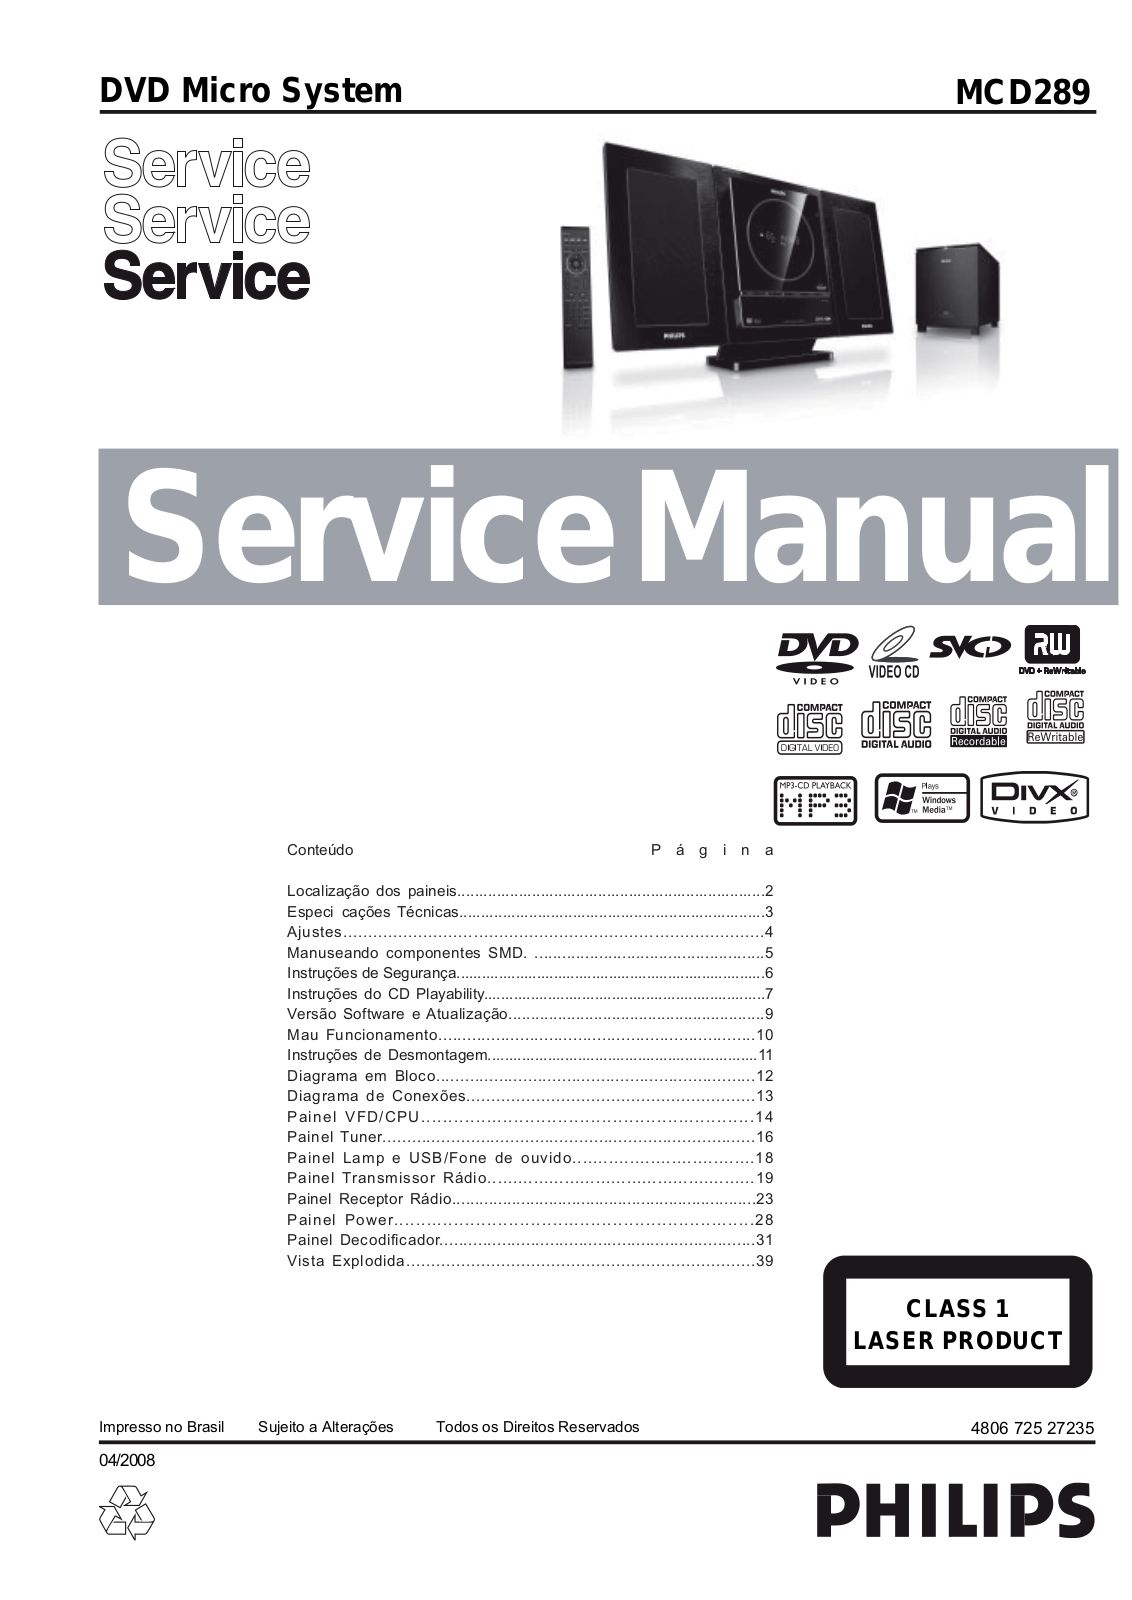 PHILIPS MCD289 Service Manual